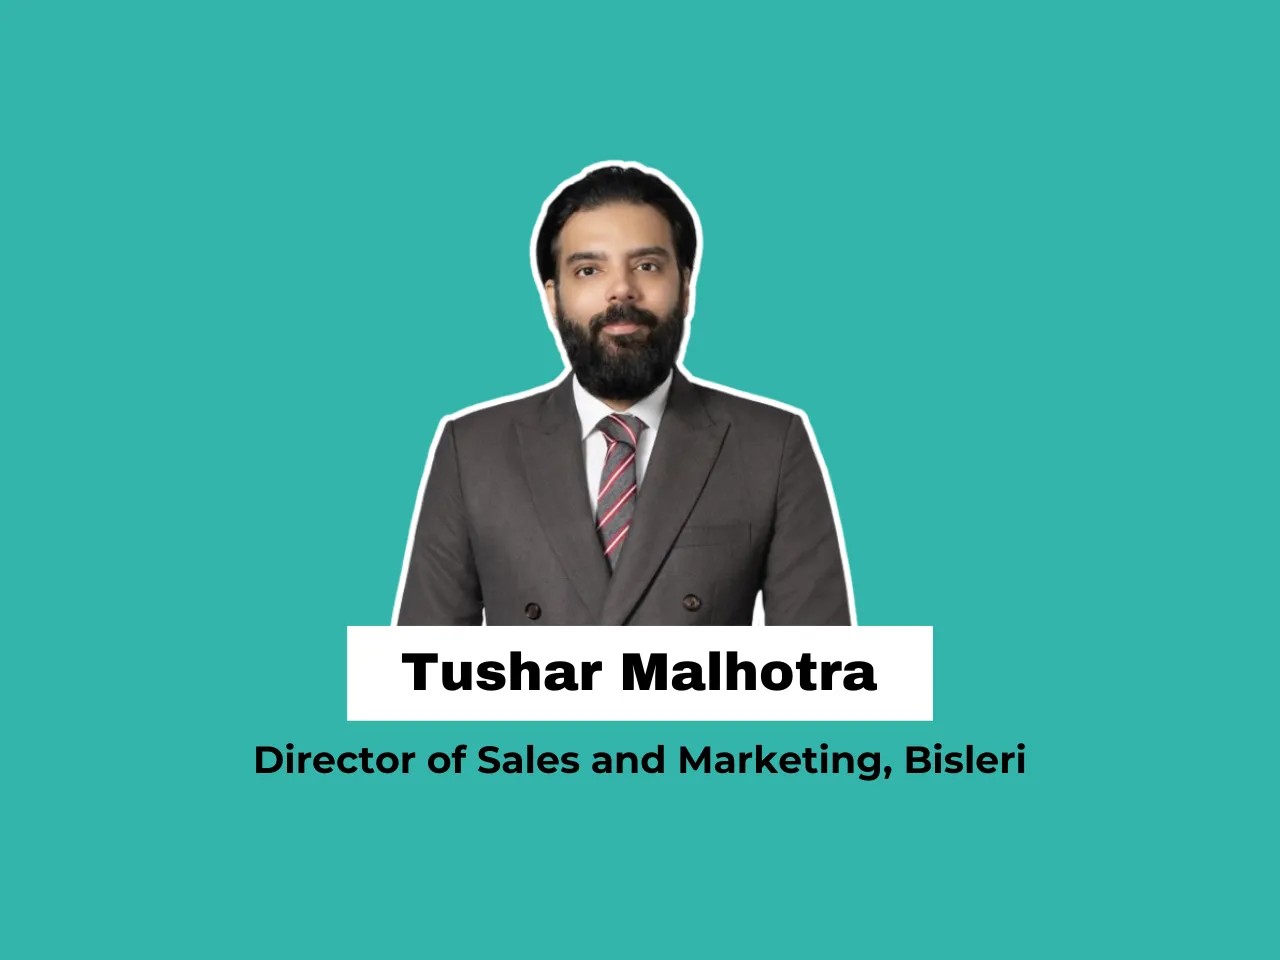 Tushar Malhotra elevated to Director of Sales and Marketing at Bisleri